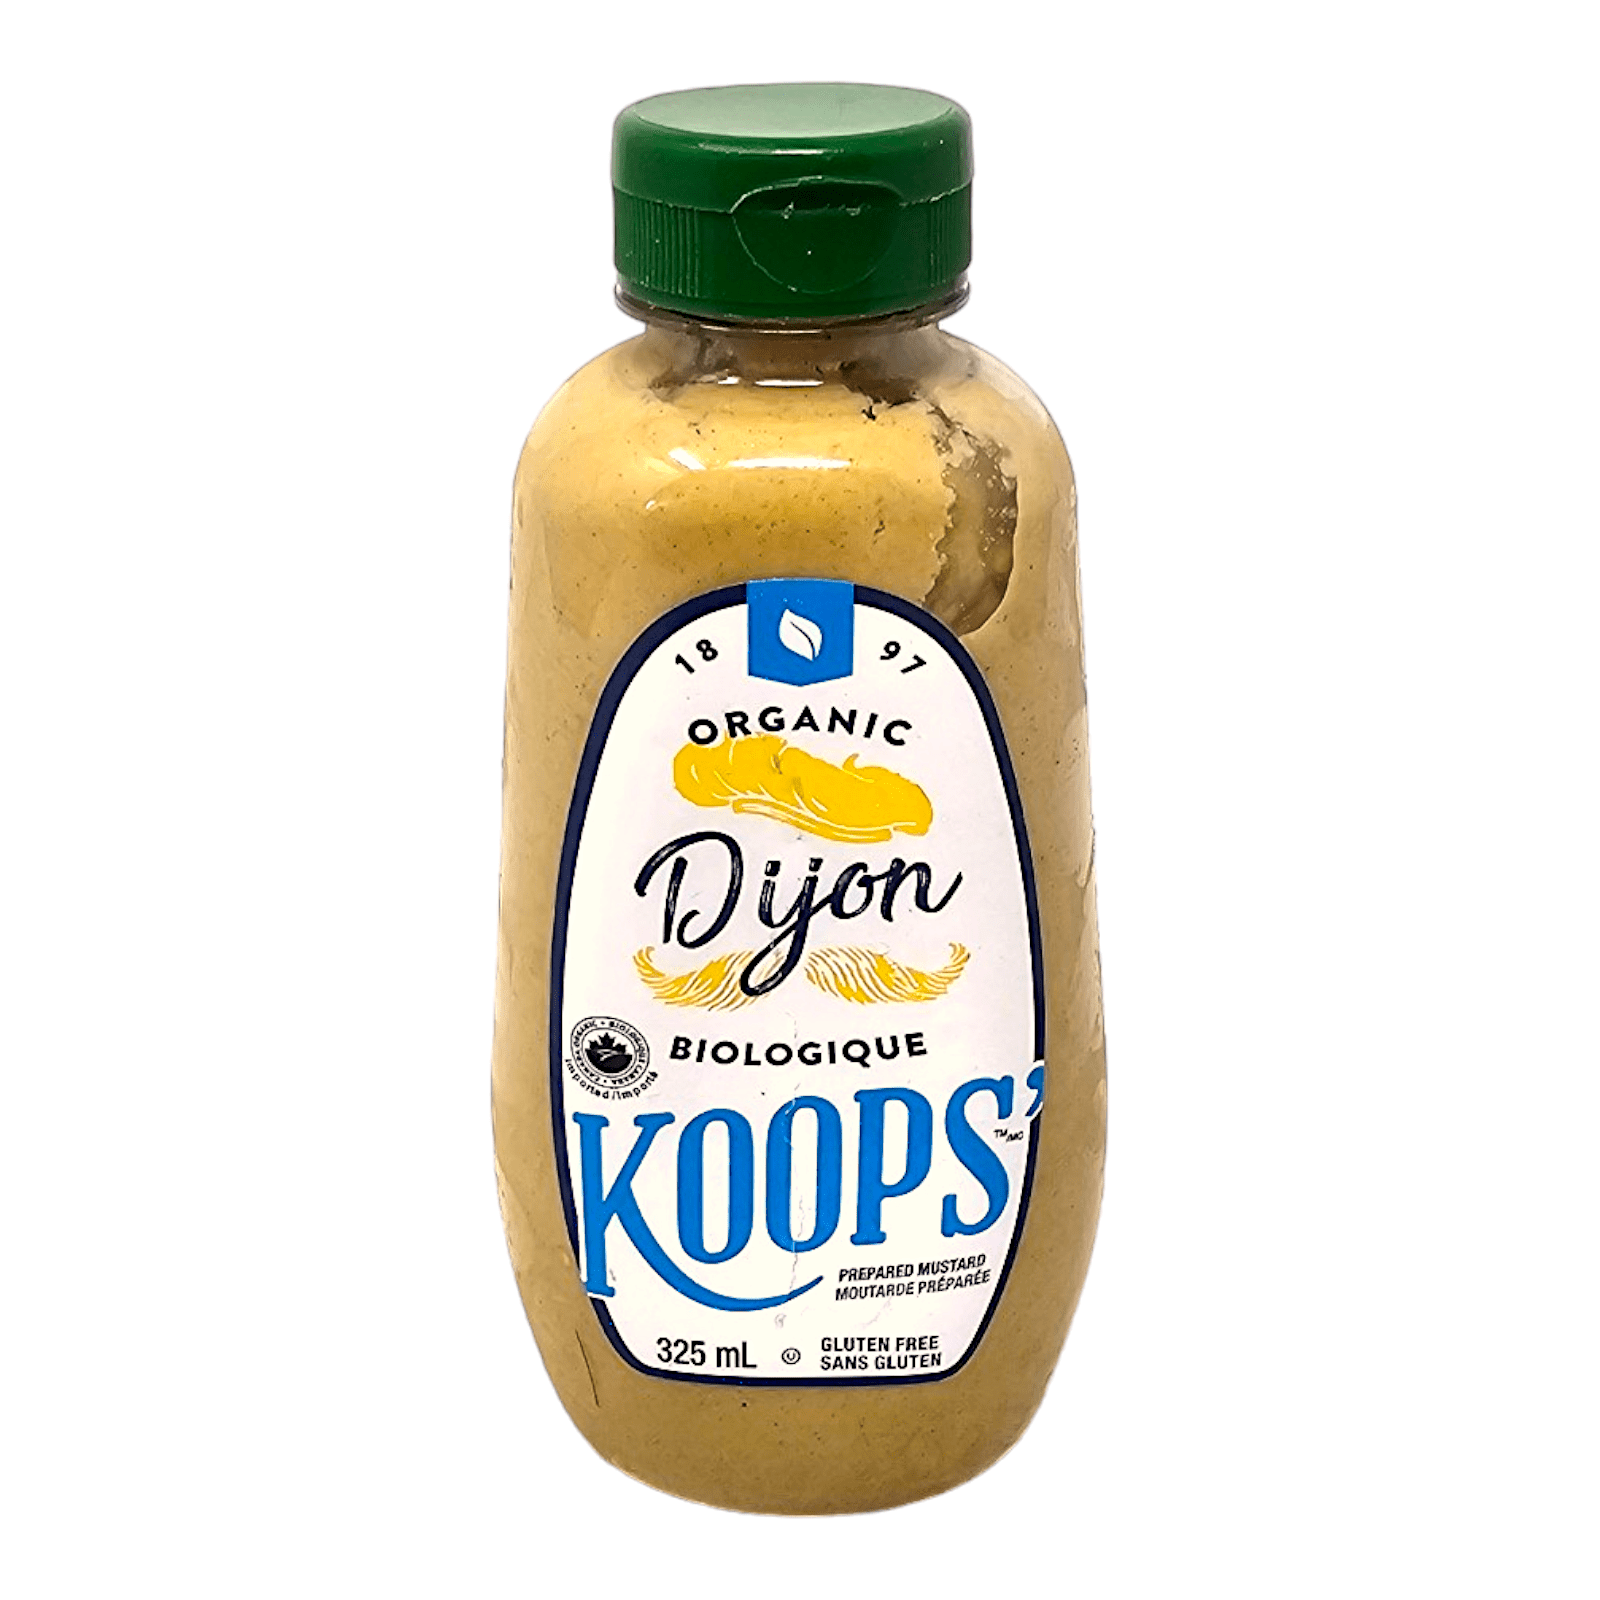 Koops’ Organic Dijon